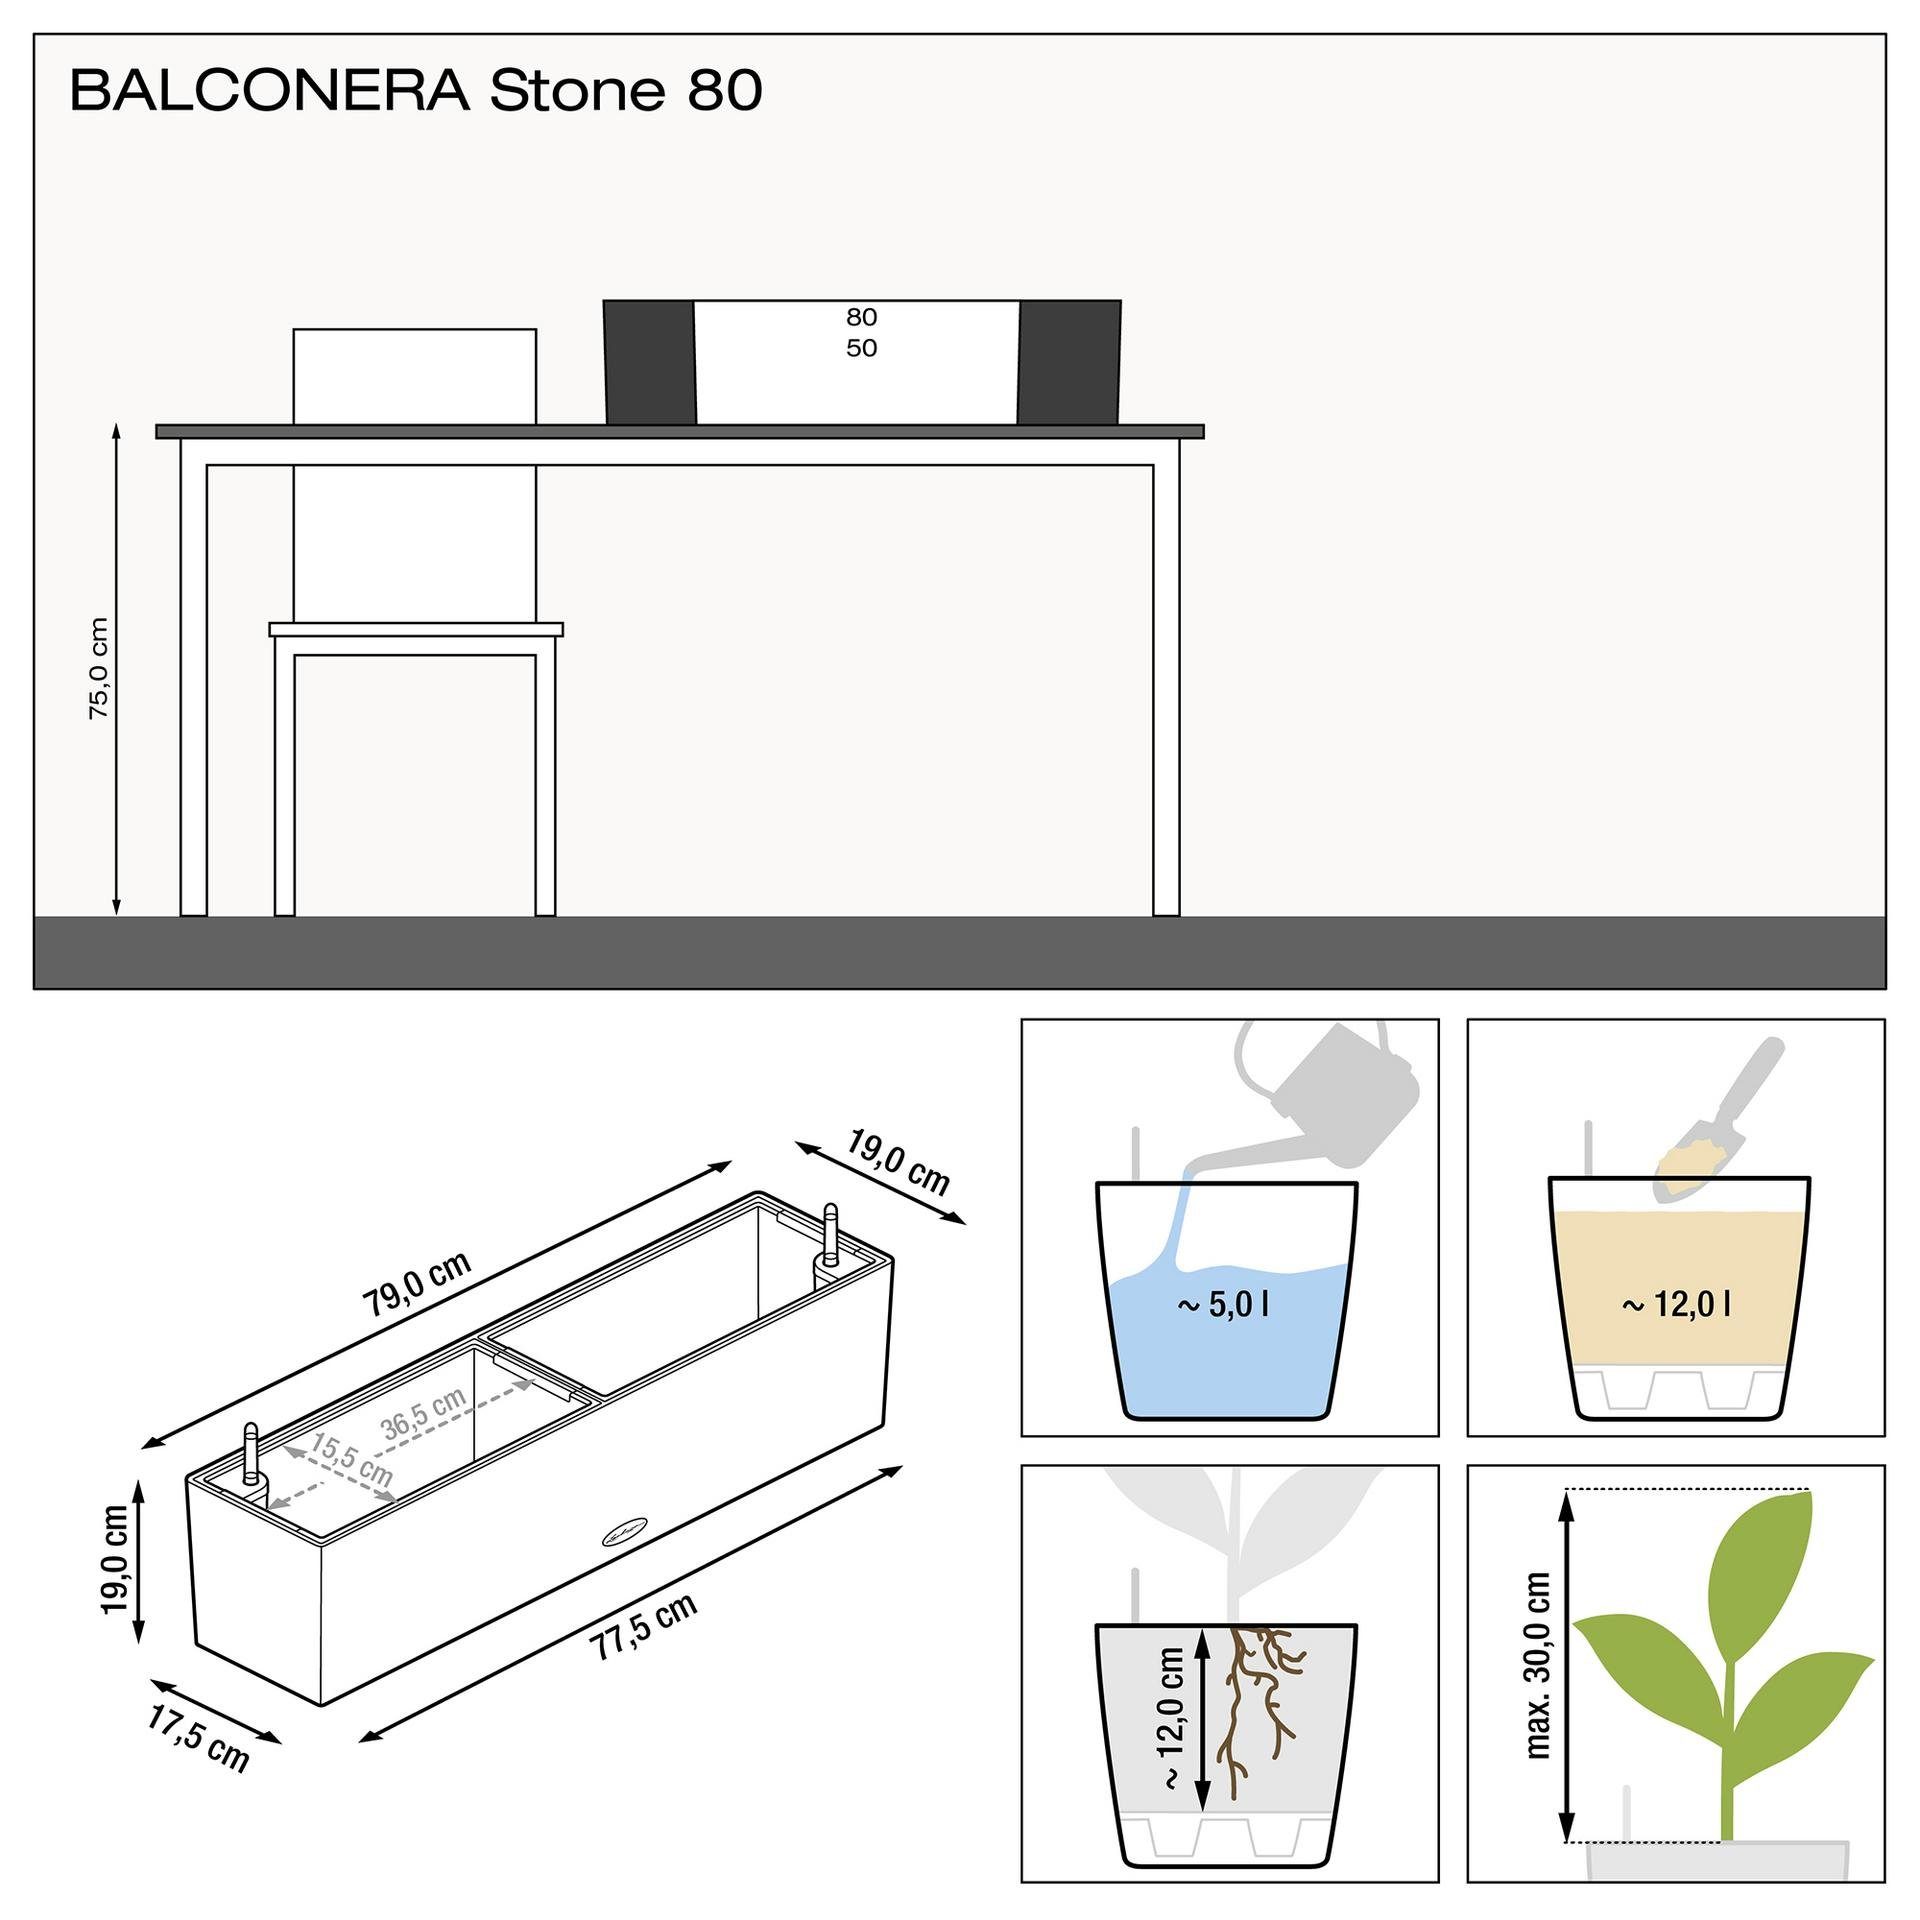 St) sandbeige Wasserspeicher (1 Lechuza® Balkonkasten Stone Balconera 80